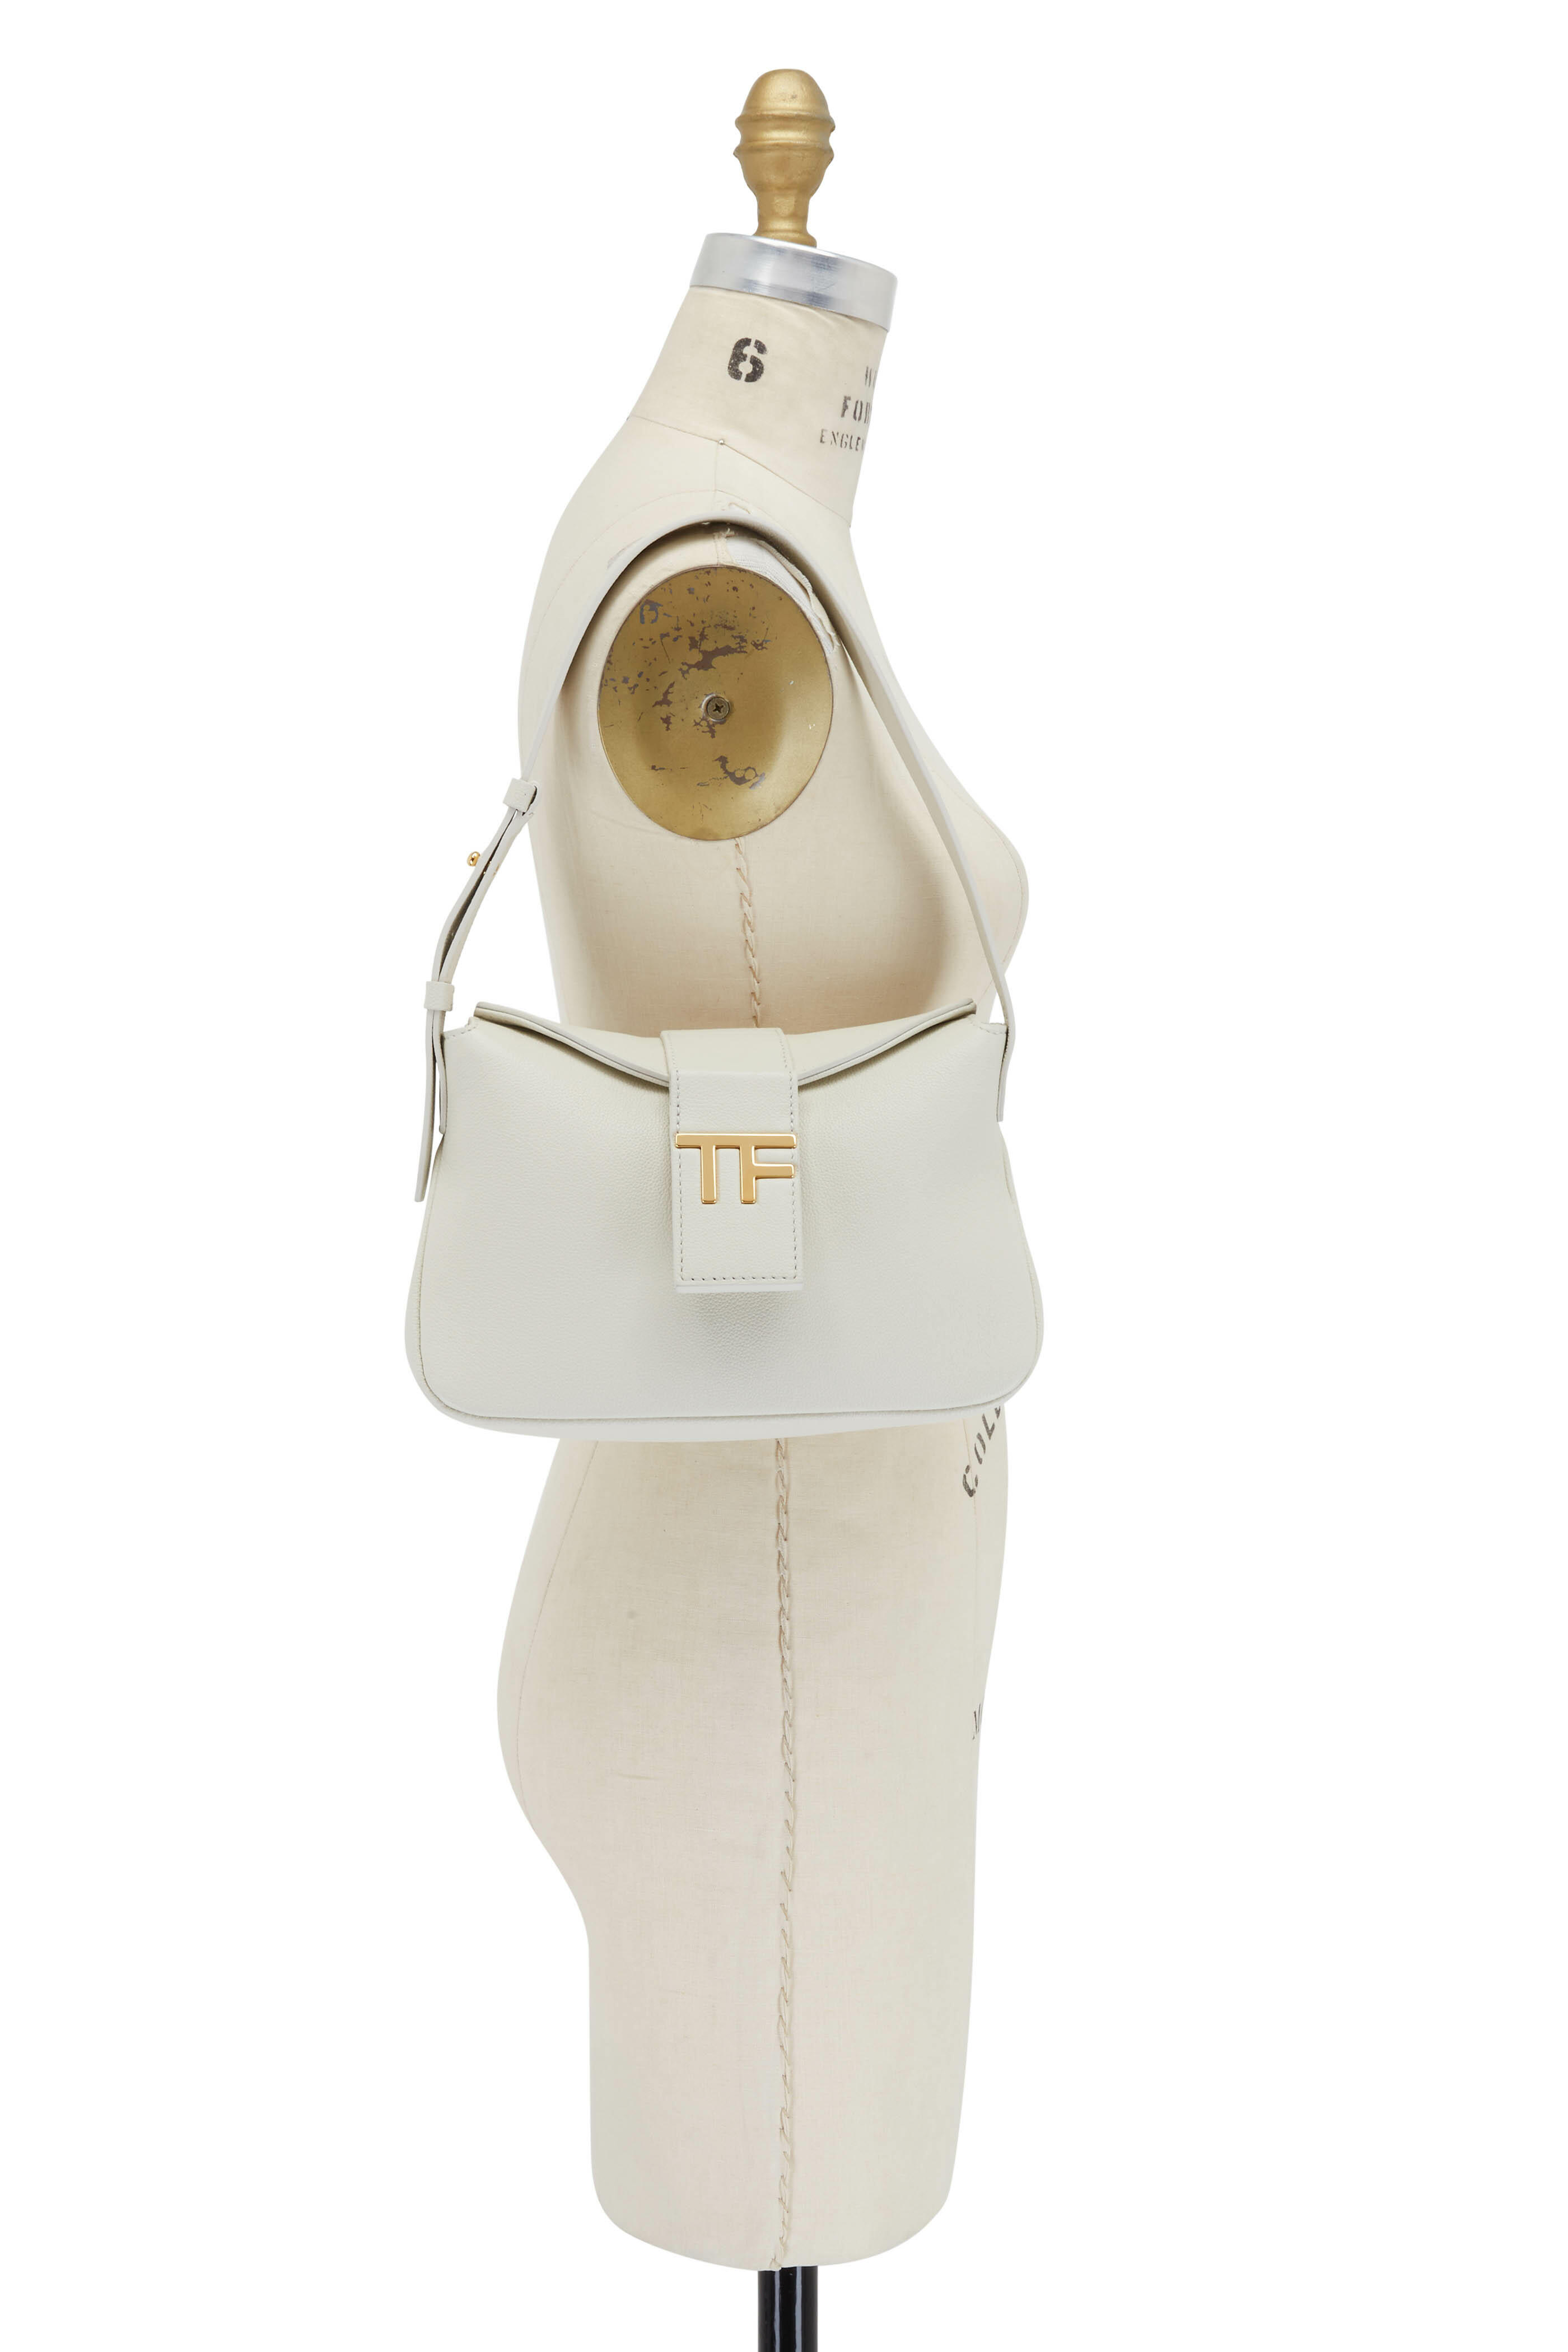 Tom Ford Mini TF Grain Leather Hobo Bag, Silk Taupe, Women's, Handbags & Purses Hobo Bags